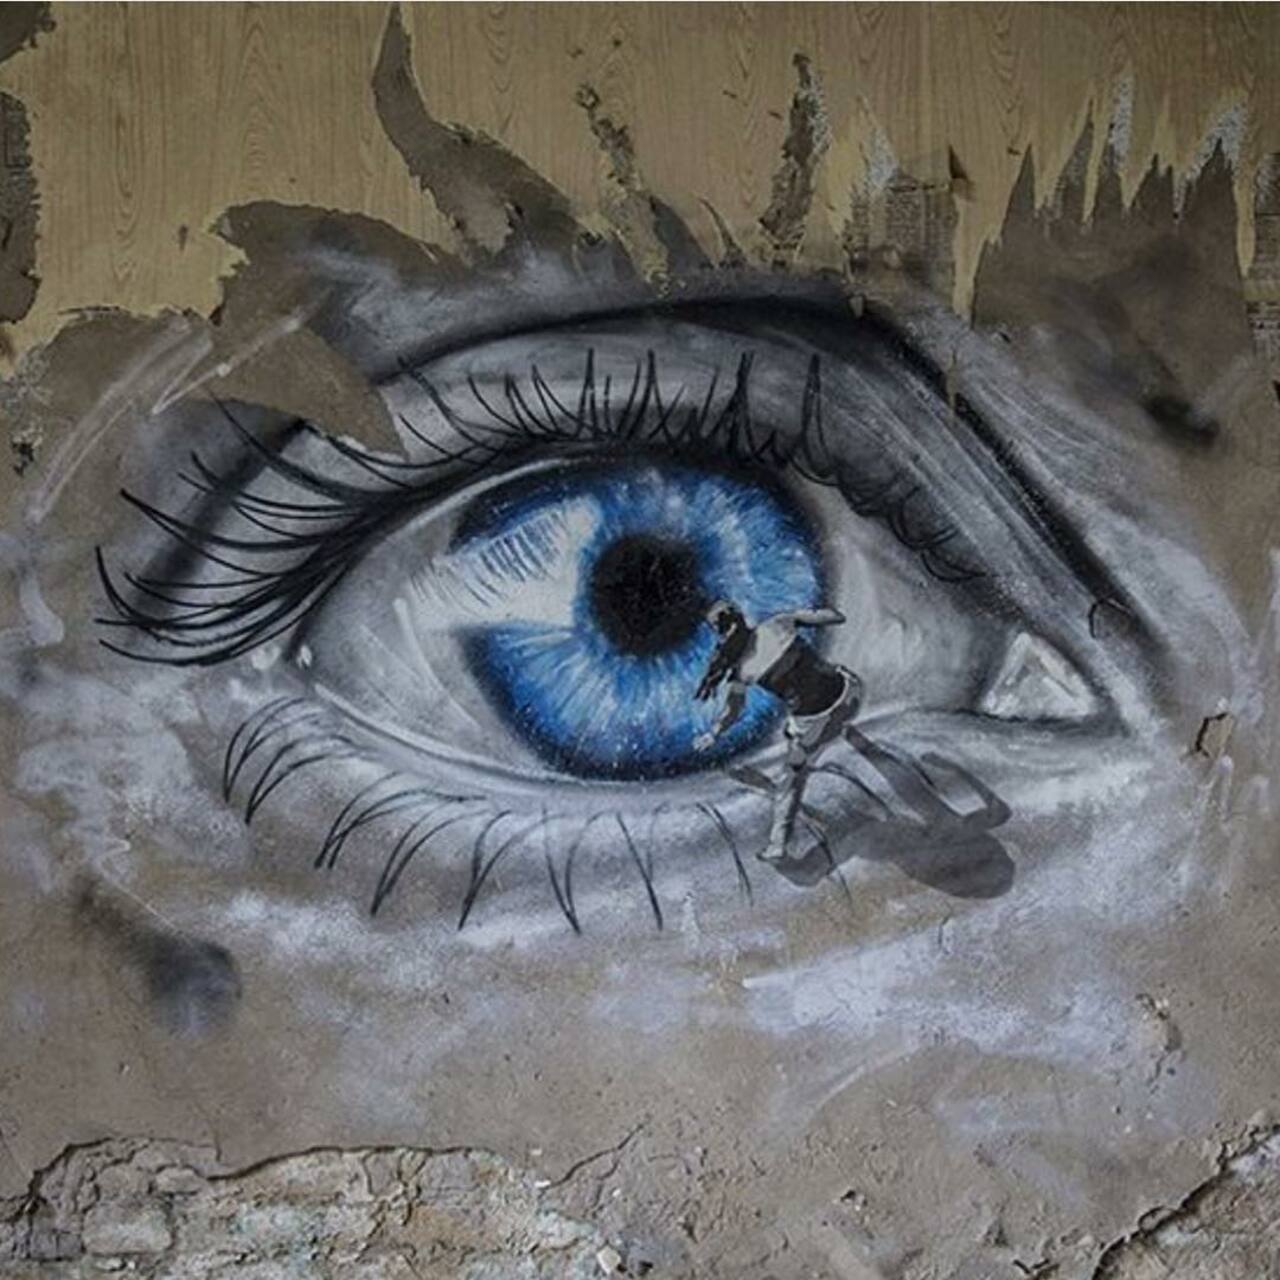 David Walker collaborates in an abandoned building with Anders Gjennestad. #StreetArt #Graffiti #Mural http://t.co/JJlLc1dSFR